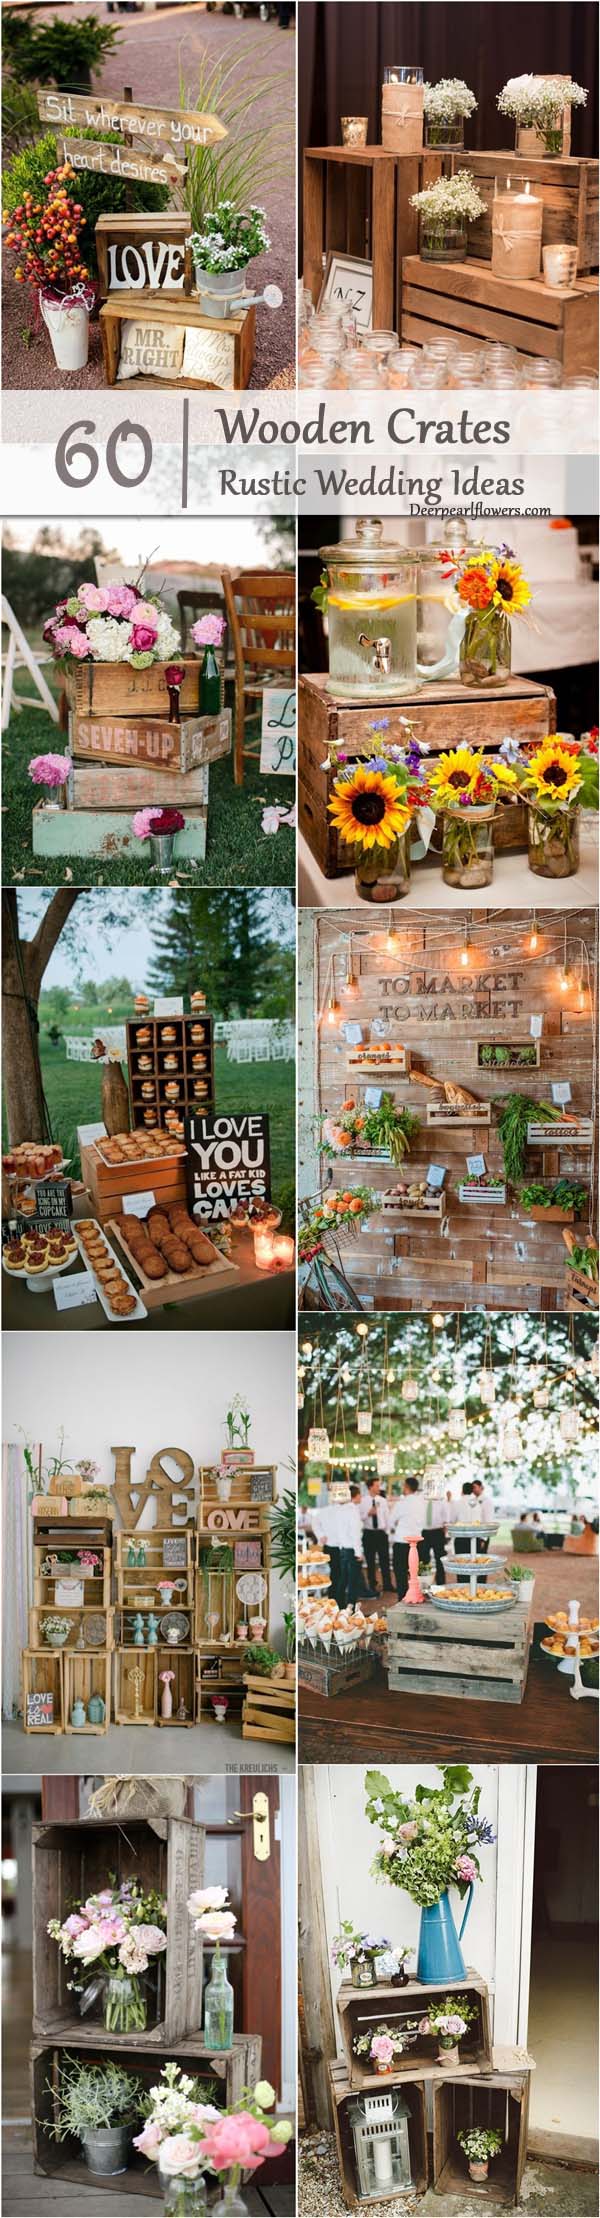 rustic country wedding ideas- wooden crates wedding decor